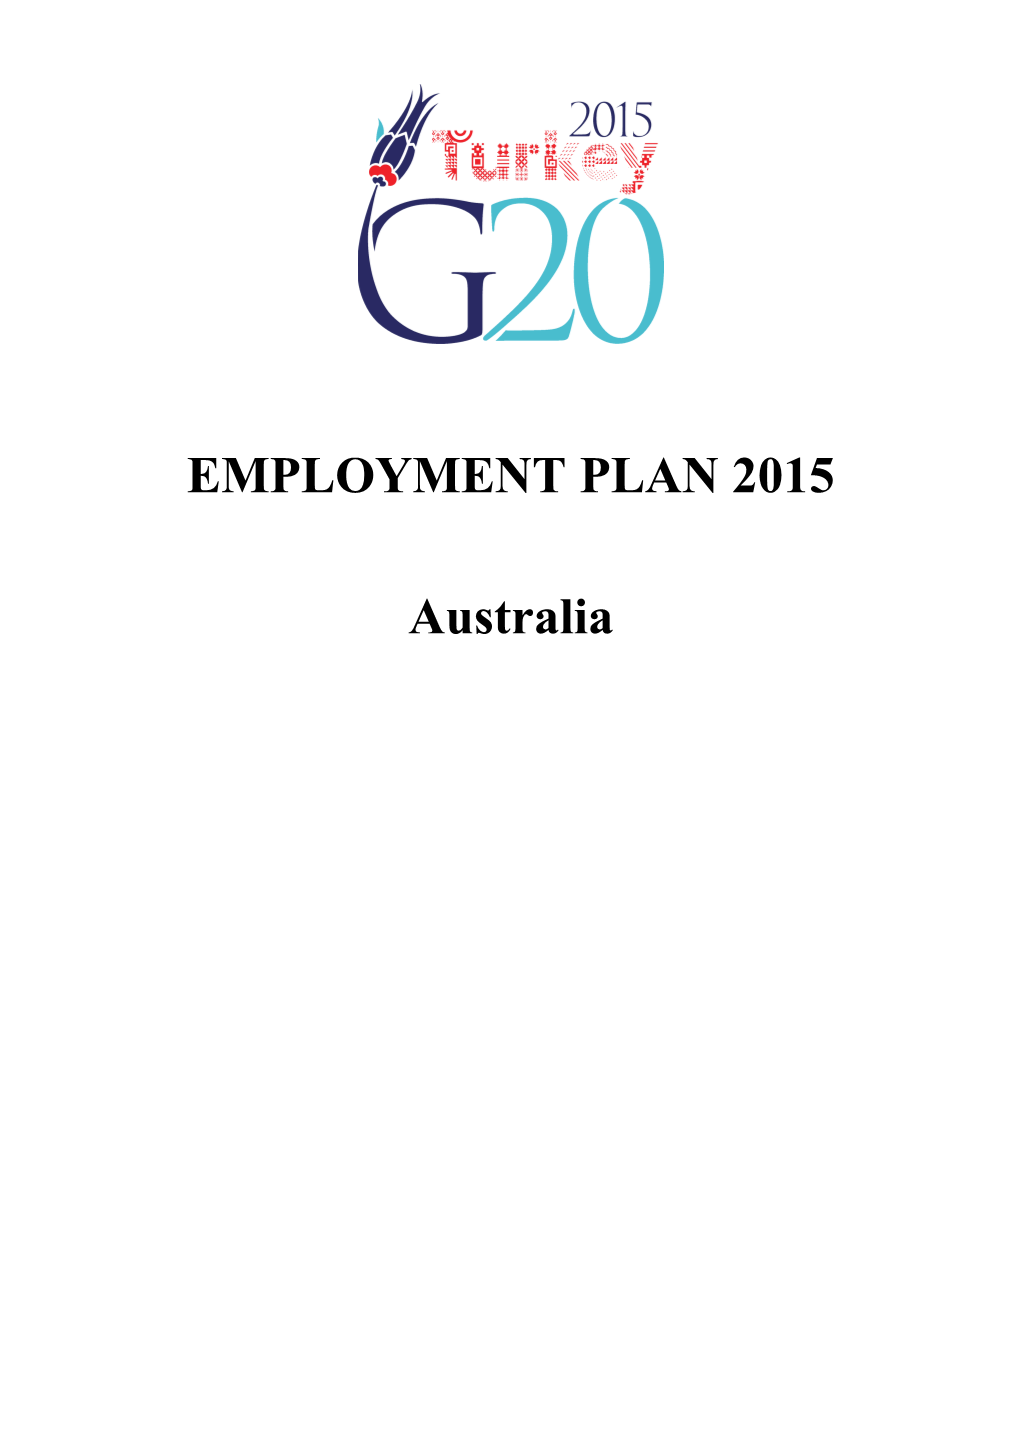 Australia G20 Employment Plan 2015